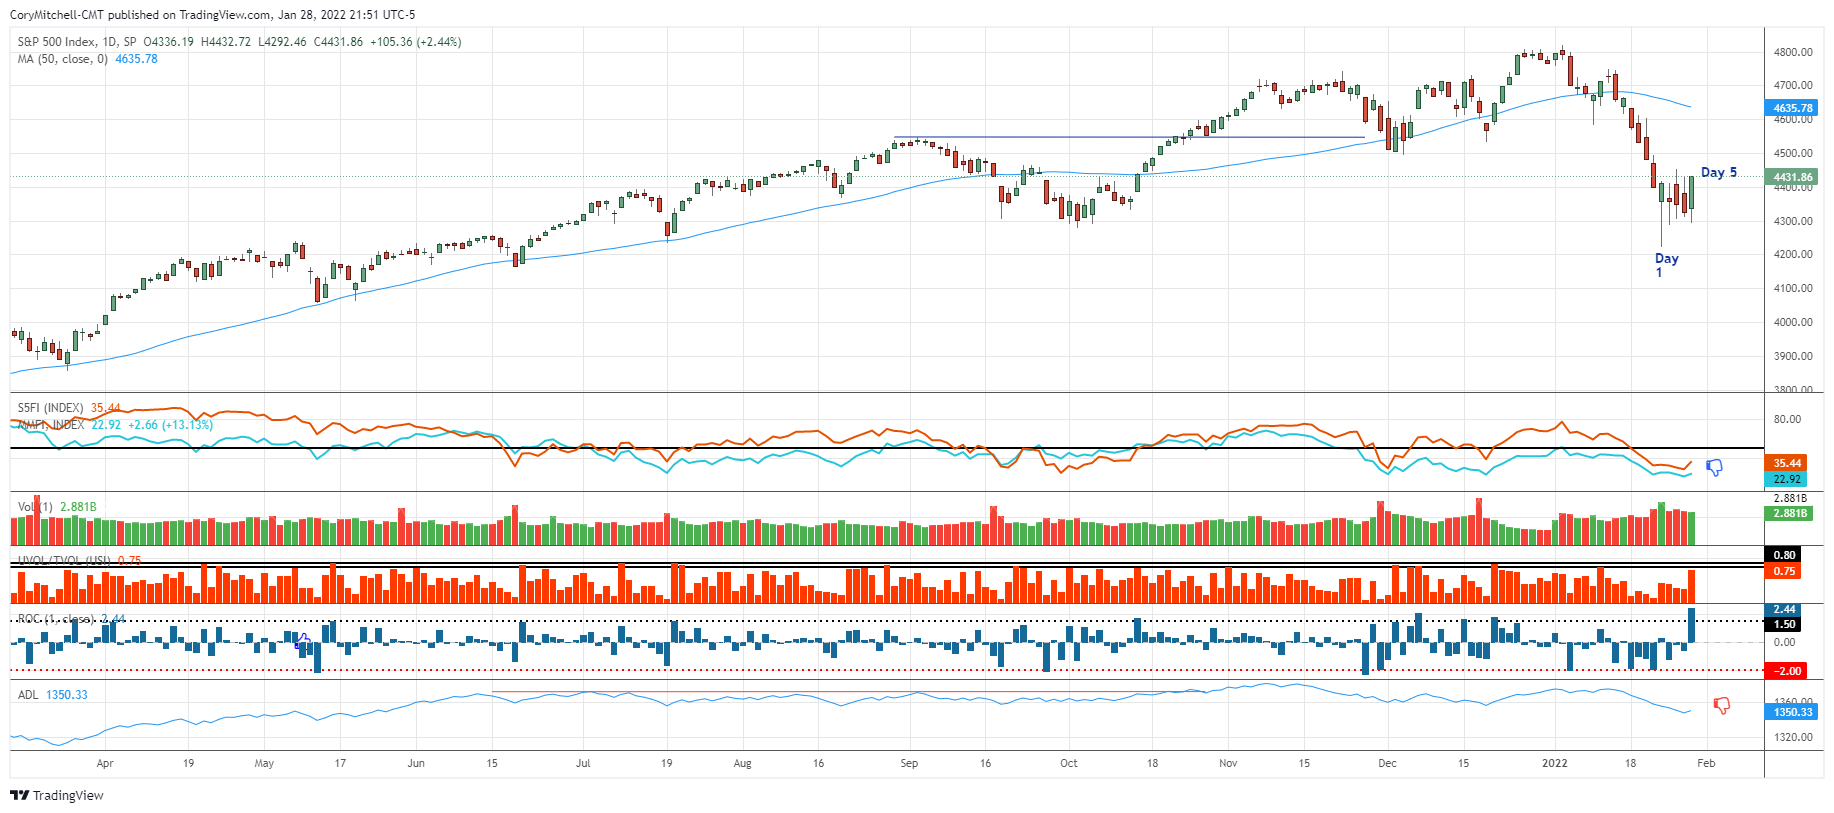 S&P 500 with weak market health indicators Jan 28 2022